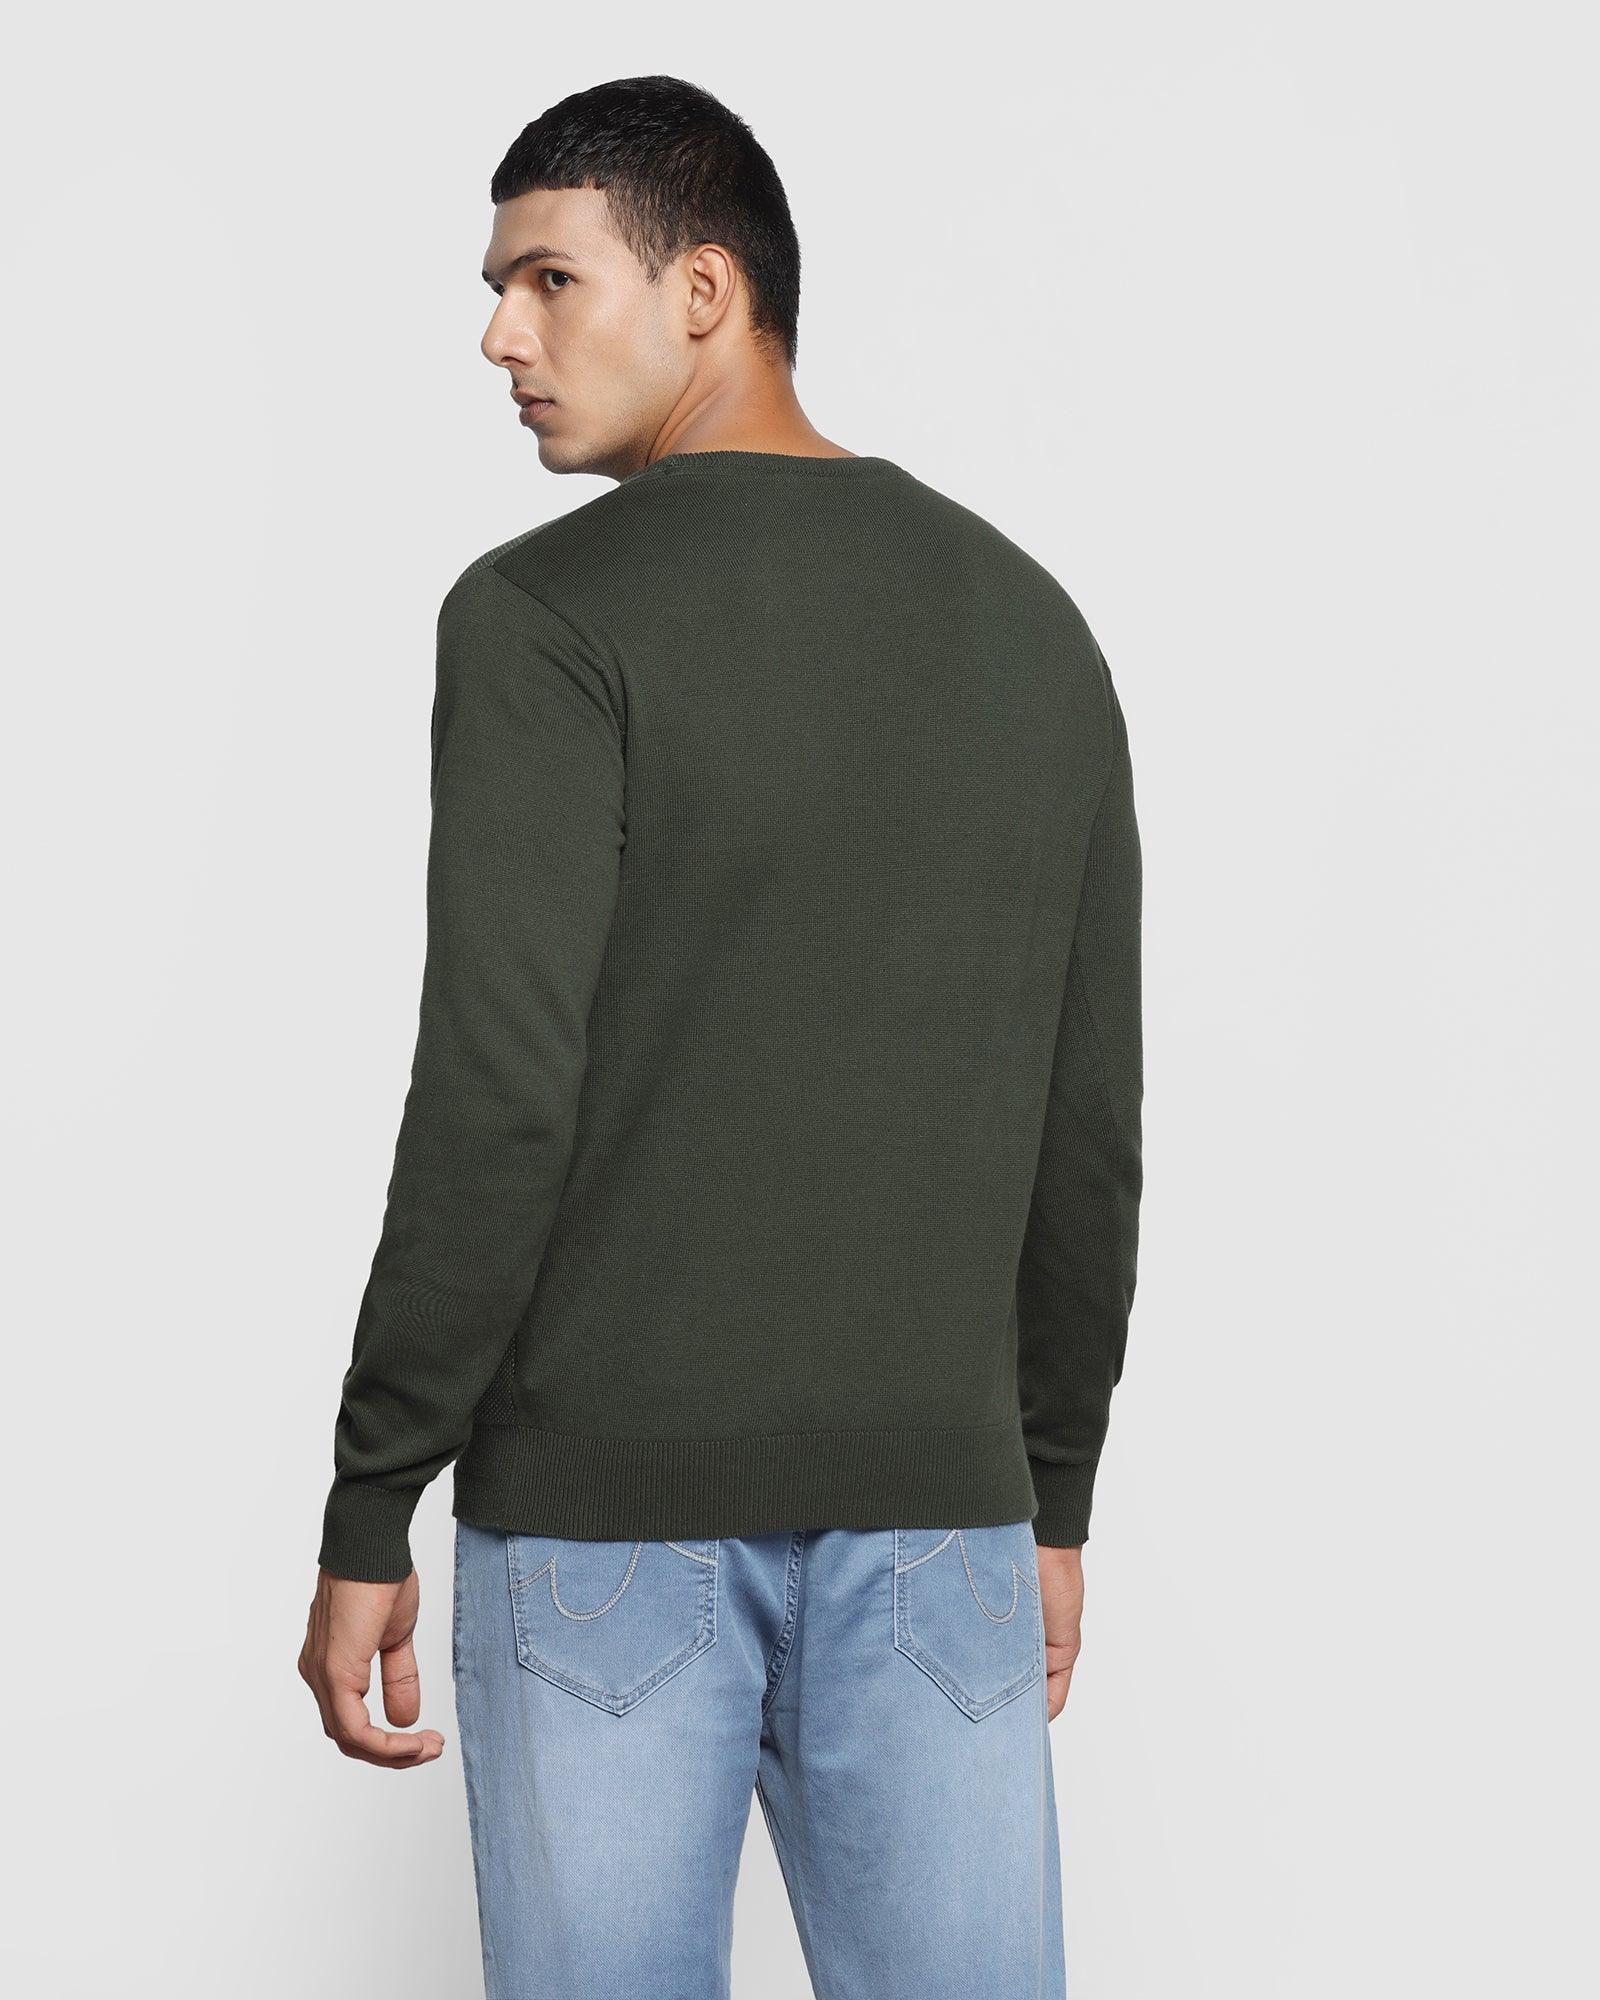 Crew Neck Olive Textured Sweater - Jaxon